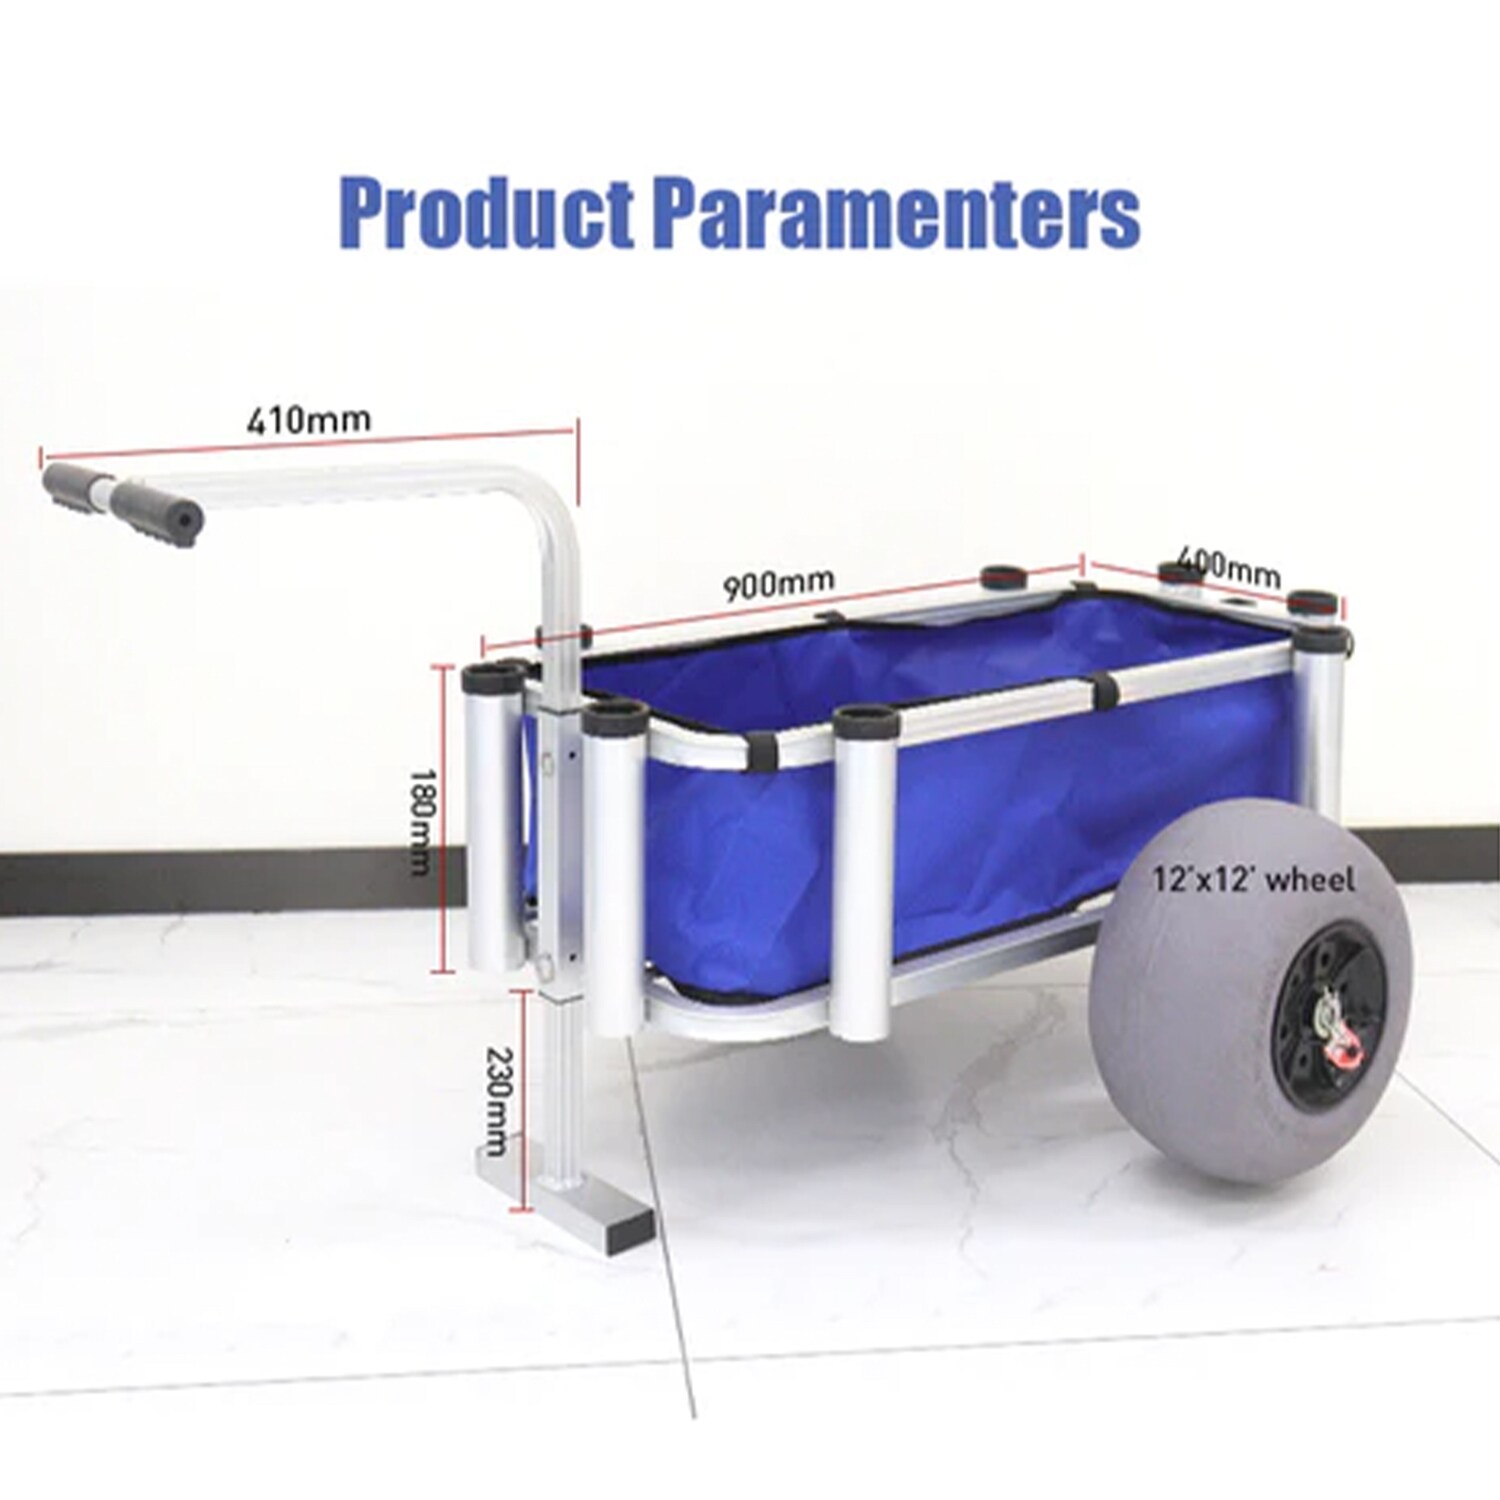 Juggernaut Storage Fishing Gear and Marine Rolling Utility Cart, Blue